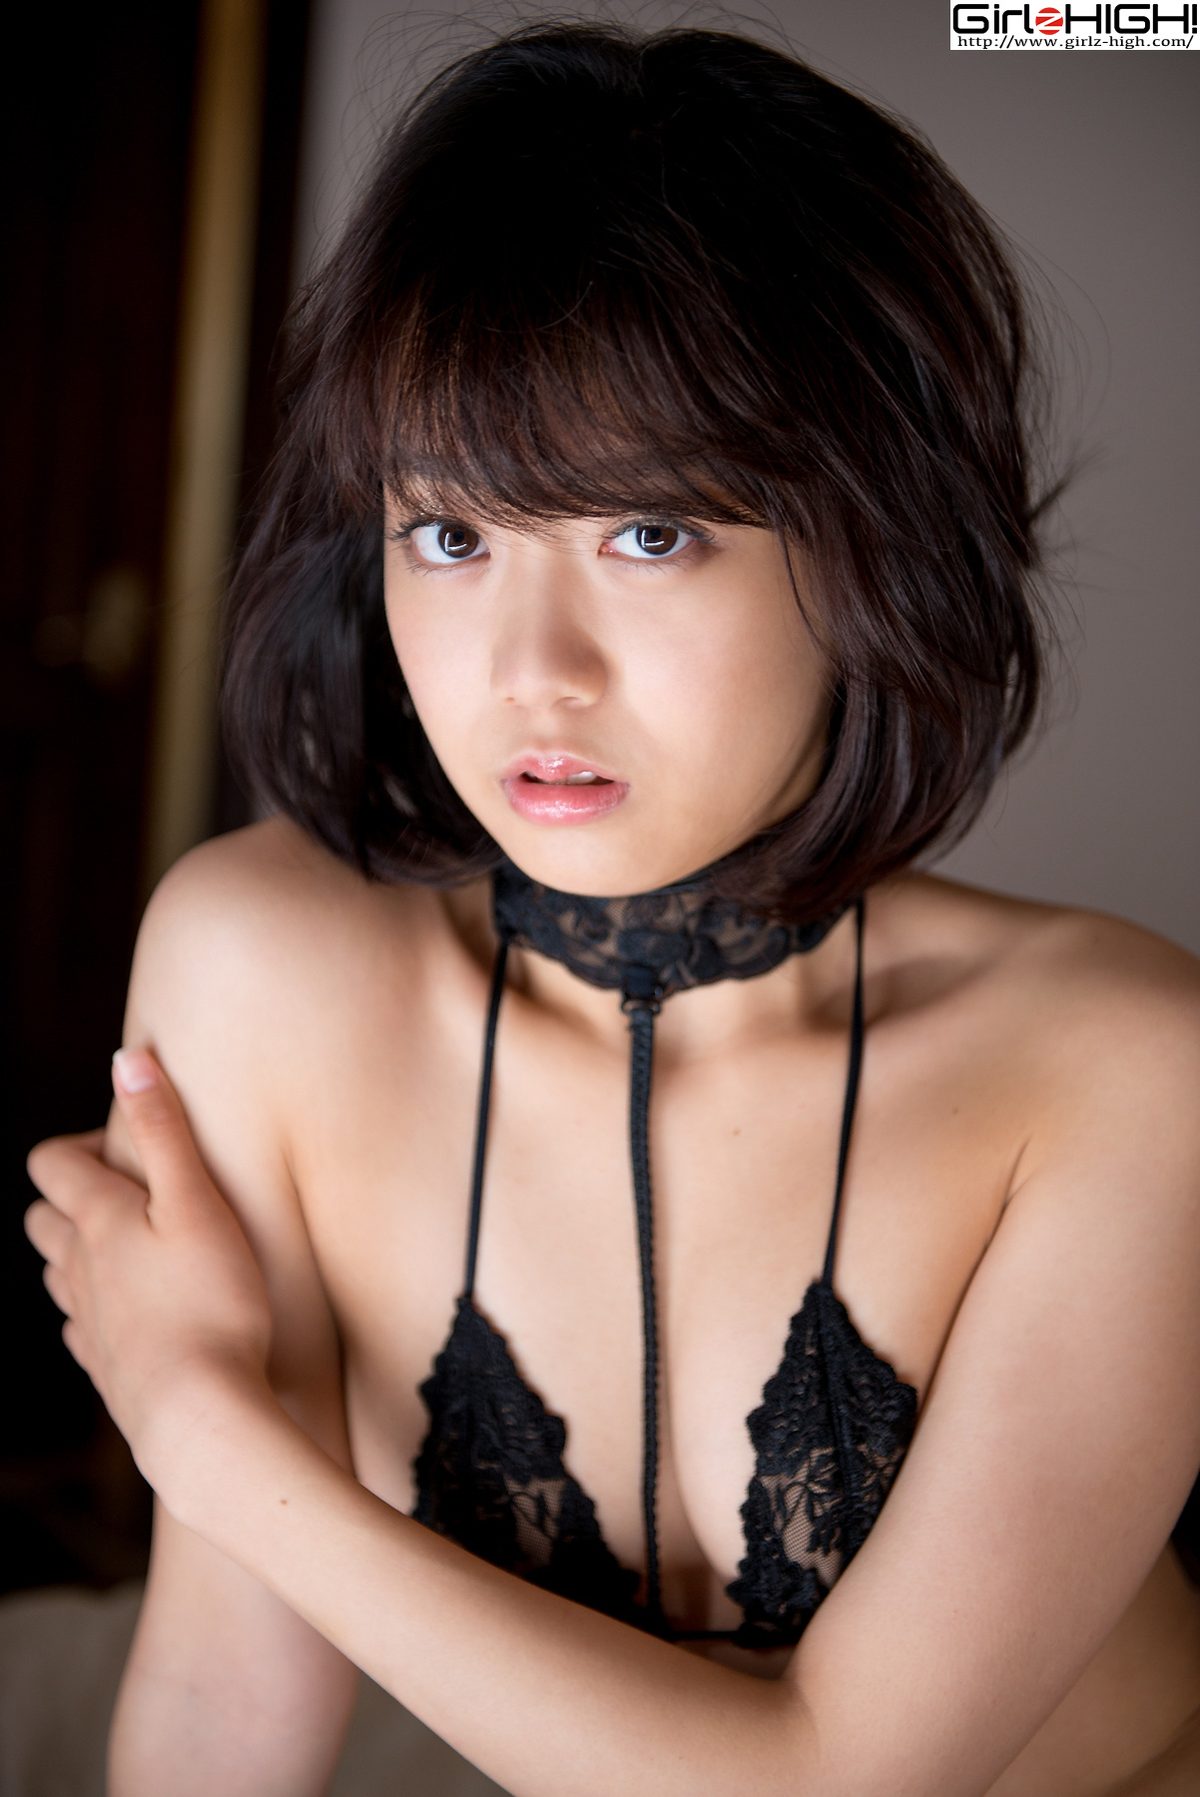 Girlz High Koharu Nishino bkoh_006_002 0019 2293261254.jpg